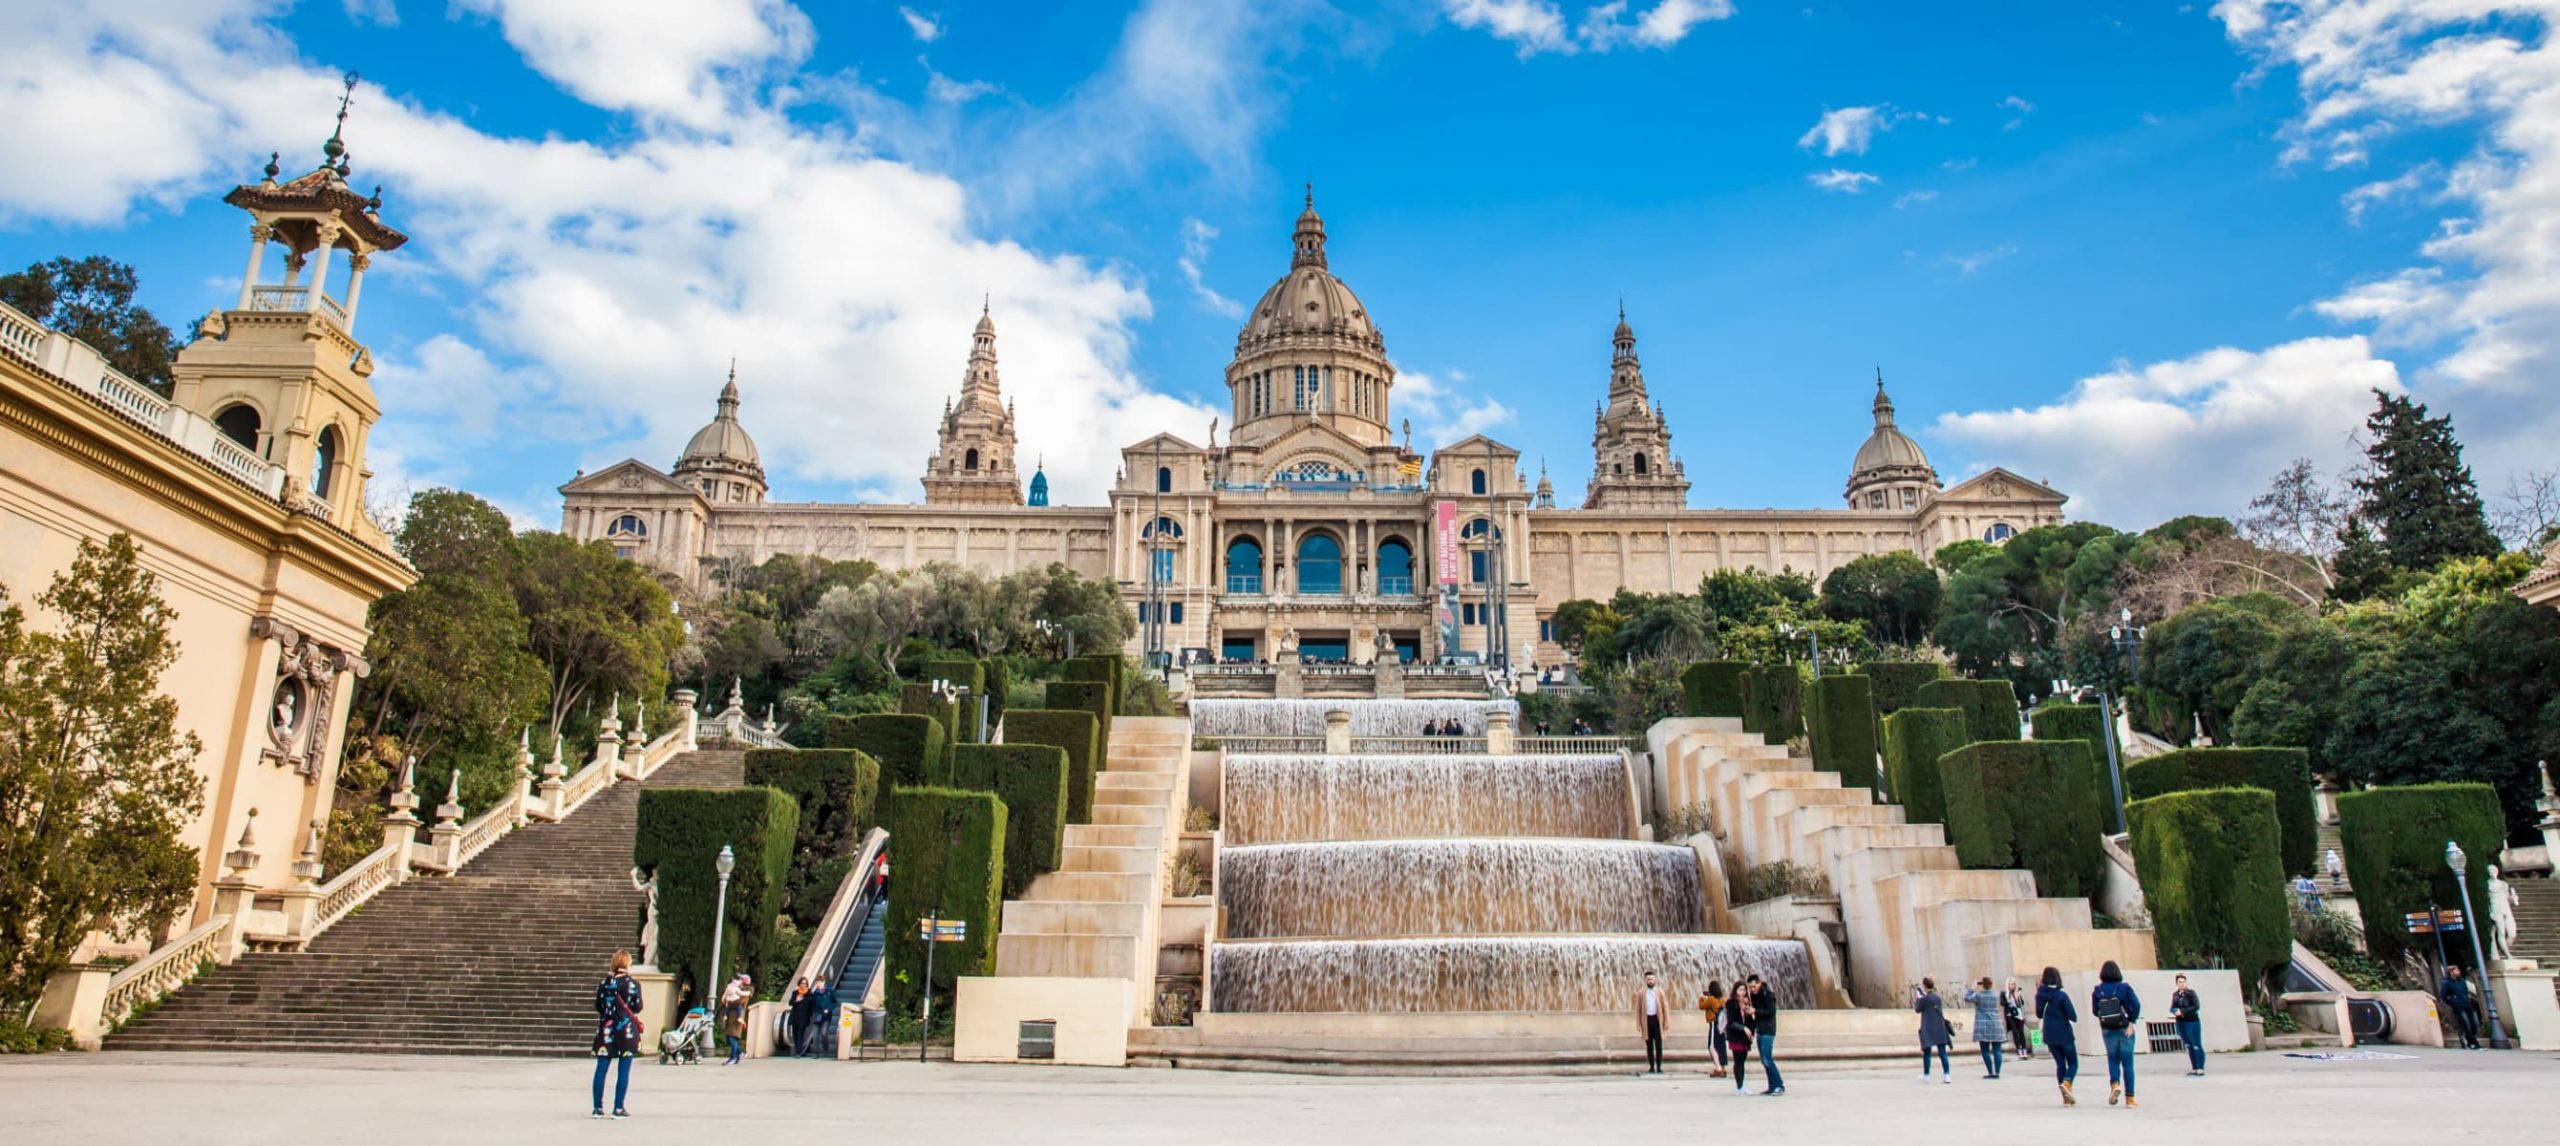 Magic Fountain of Montjuic and the Museu Nacional d'art de Catalunya, in Barcelona, Spain.